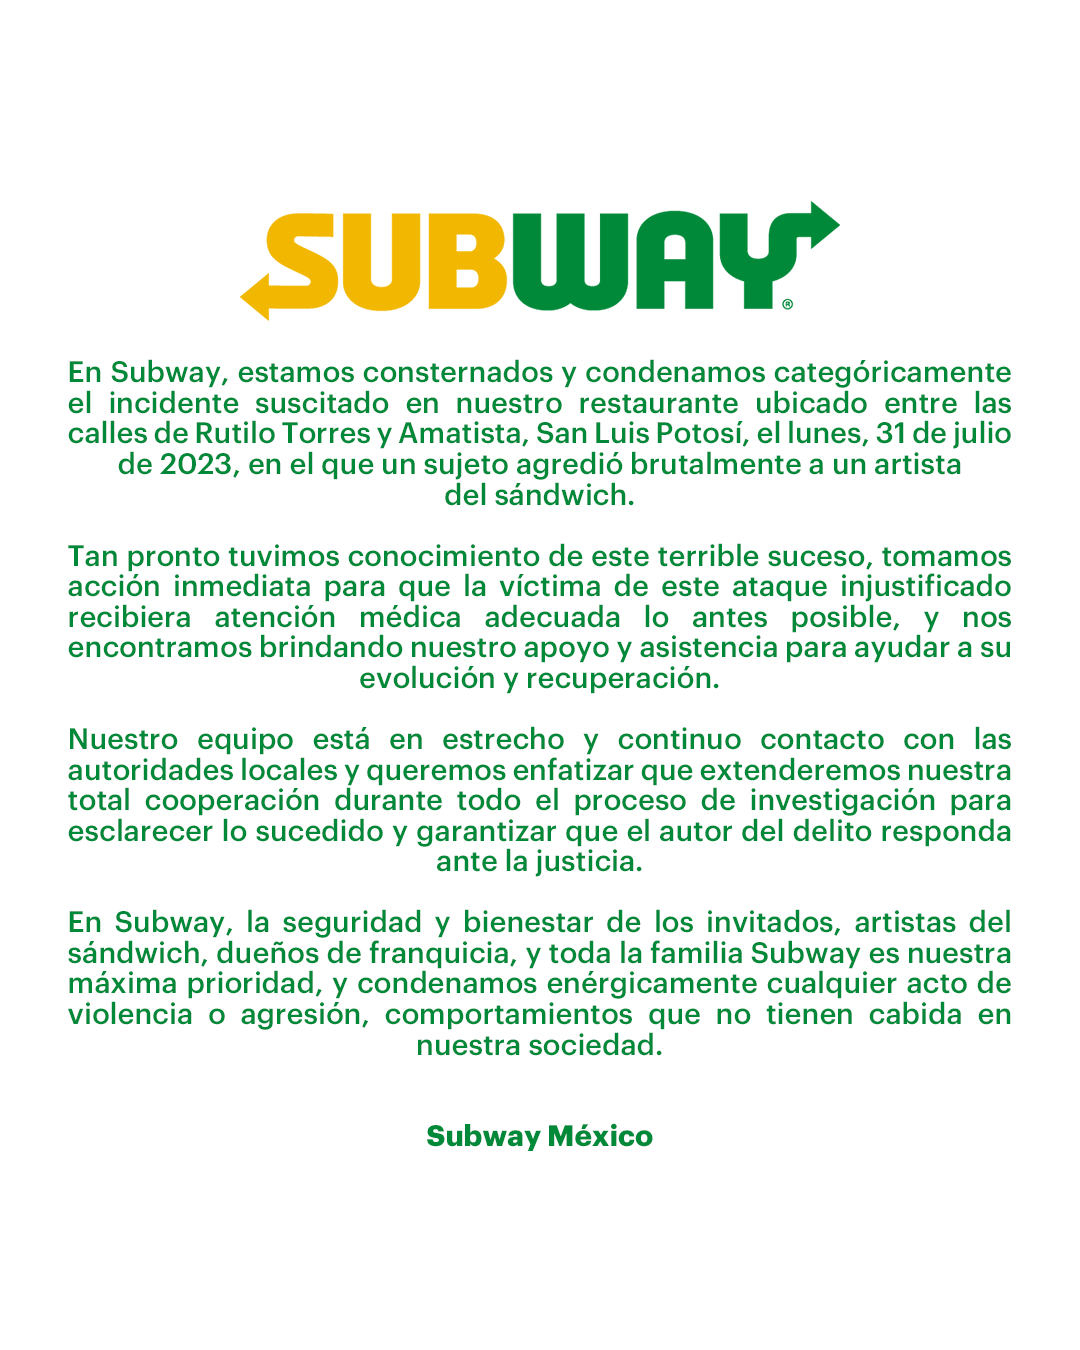 (Twitter/@subwaymexico)